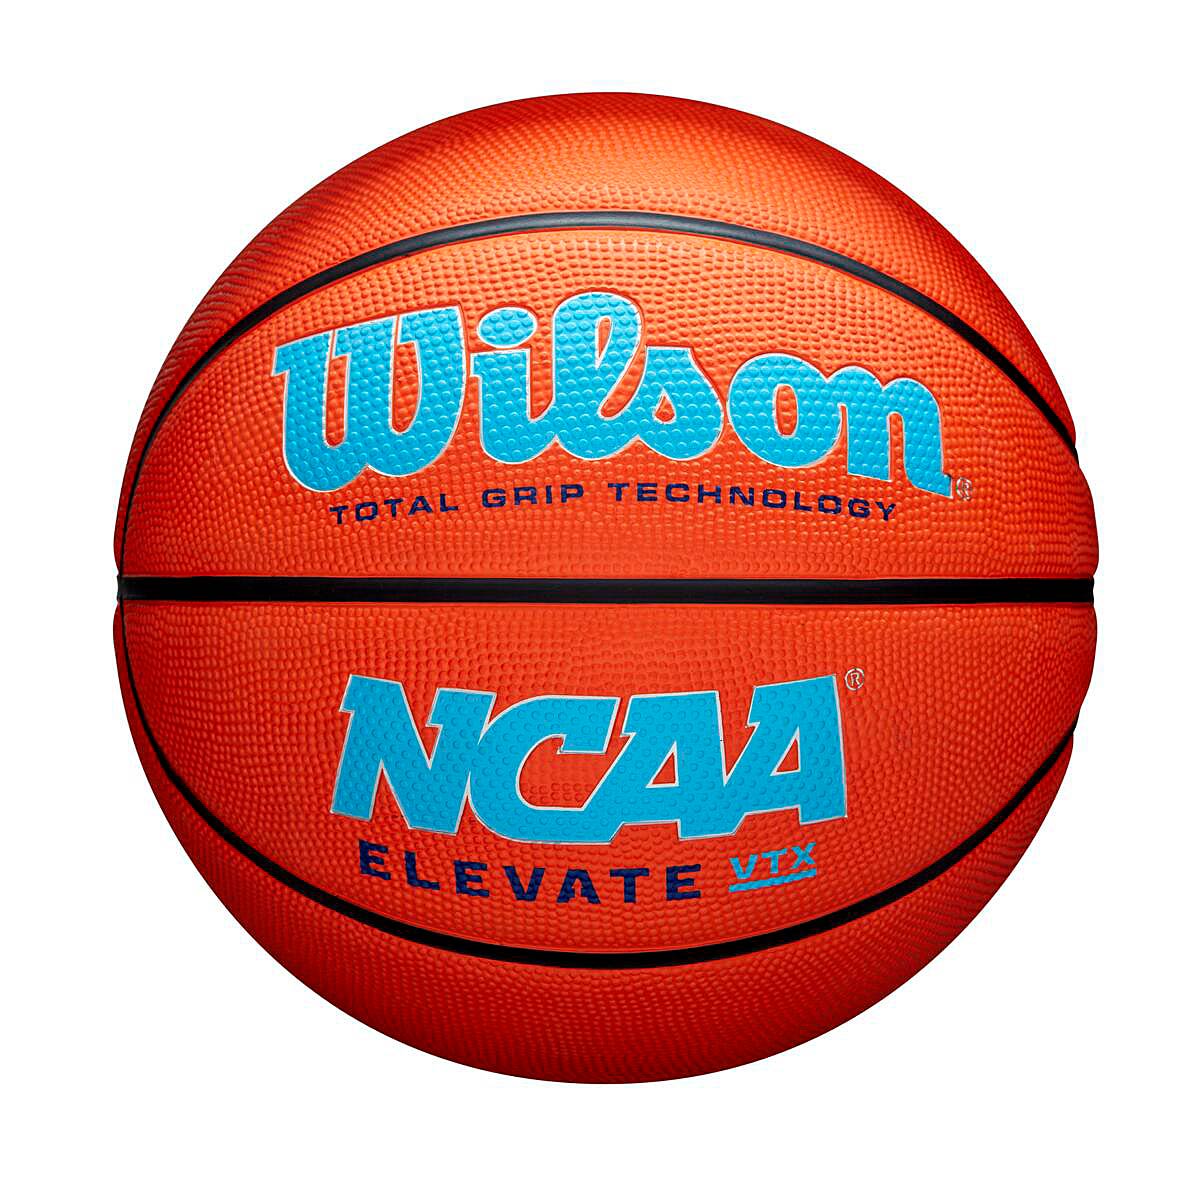 Wilson Ncaa Elevate Vtx Basketball, Orange/Blue